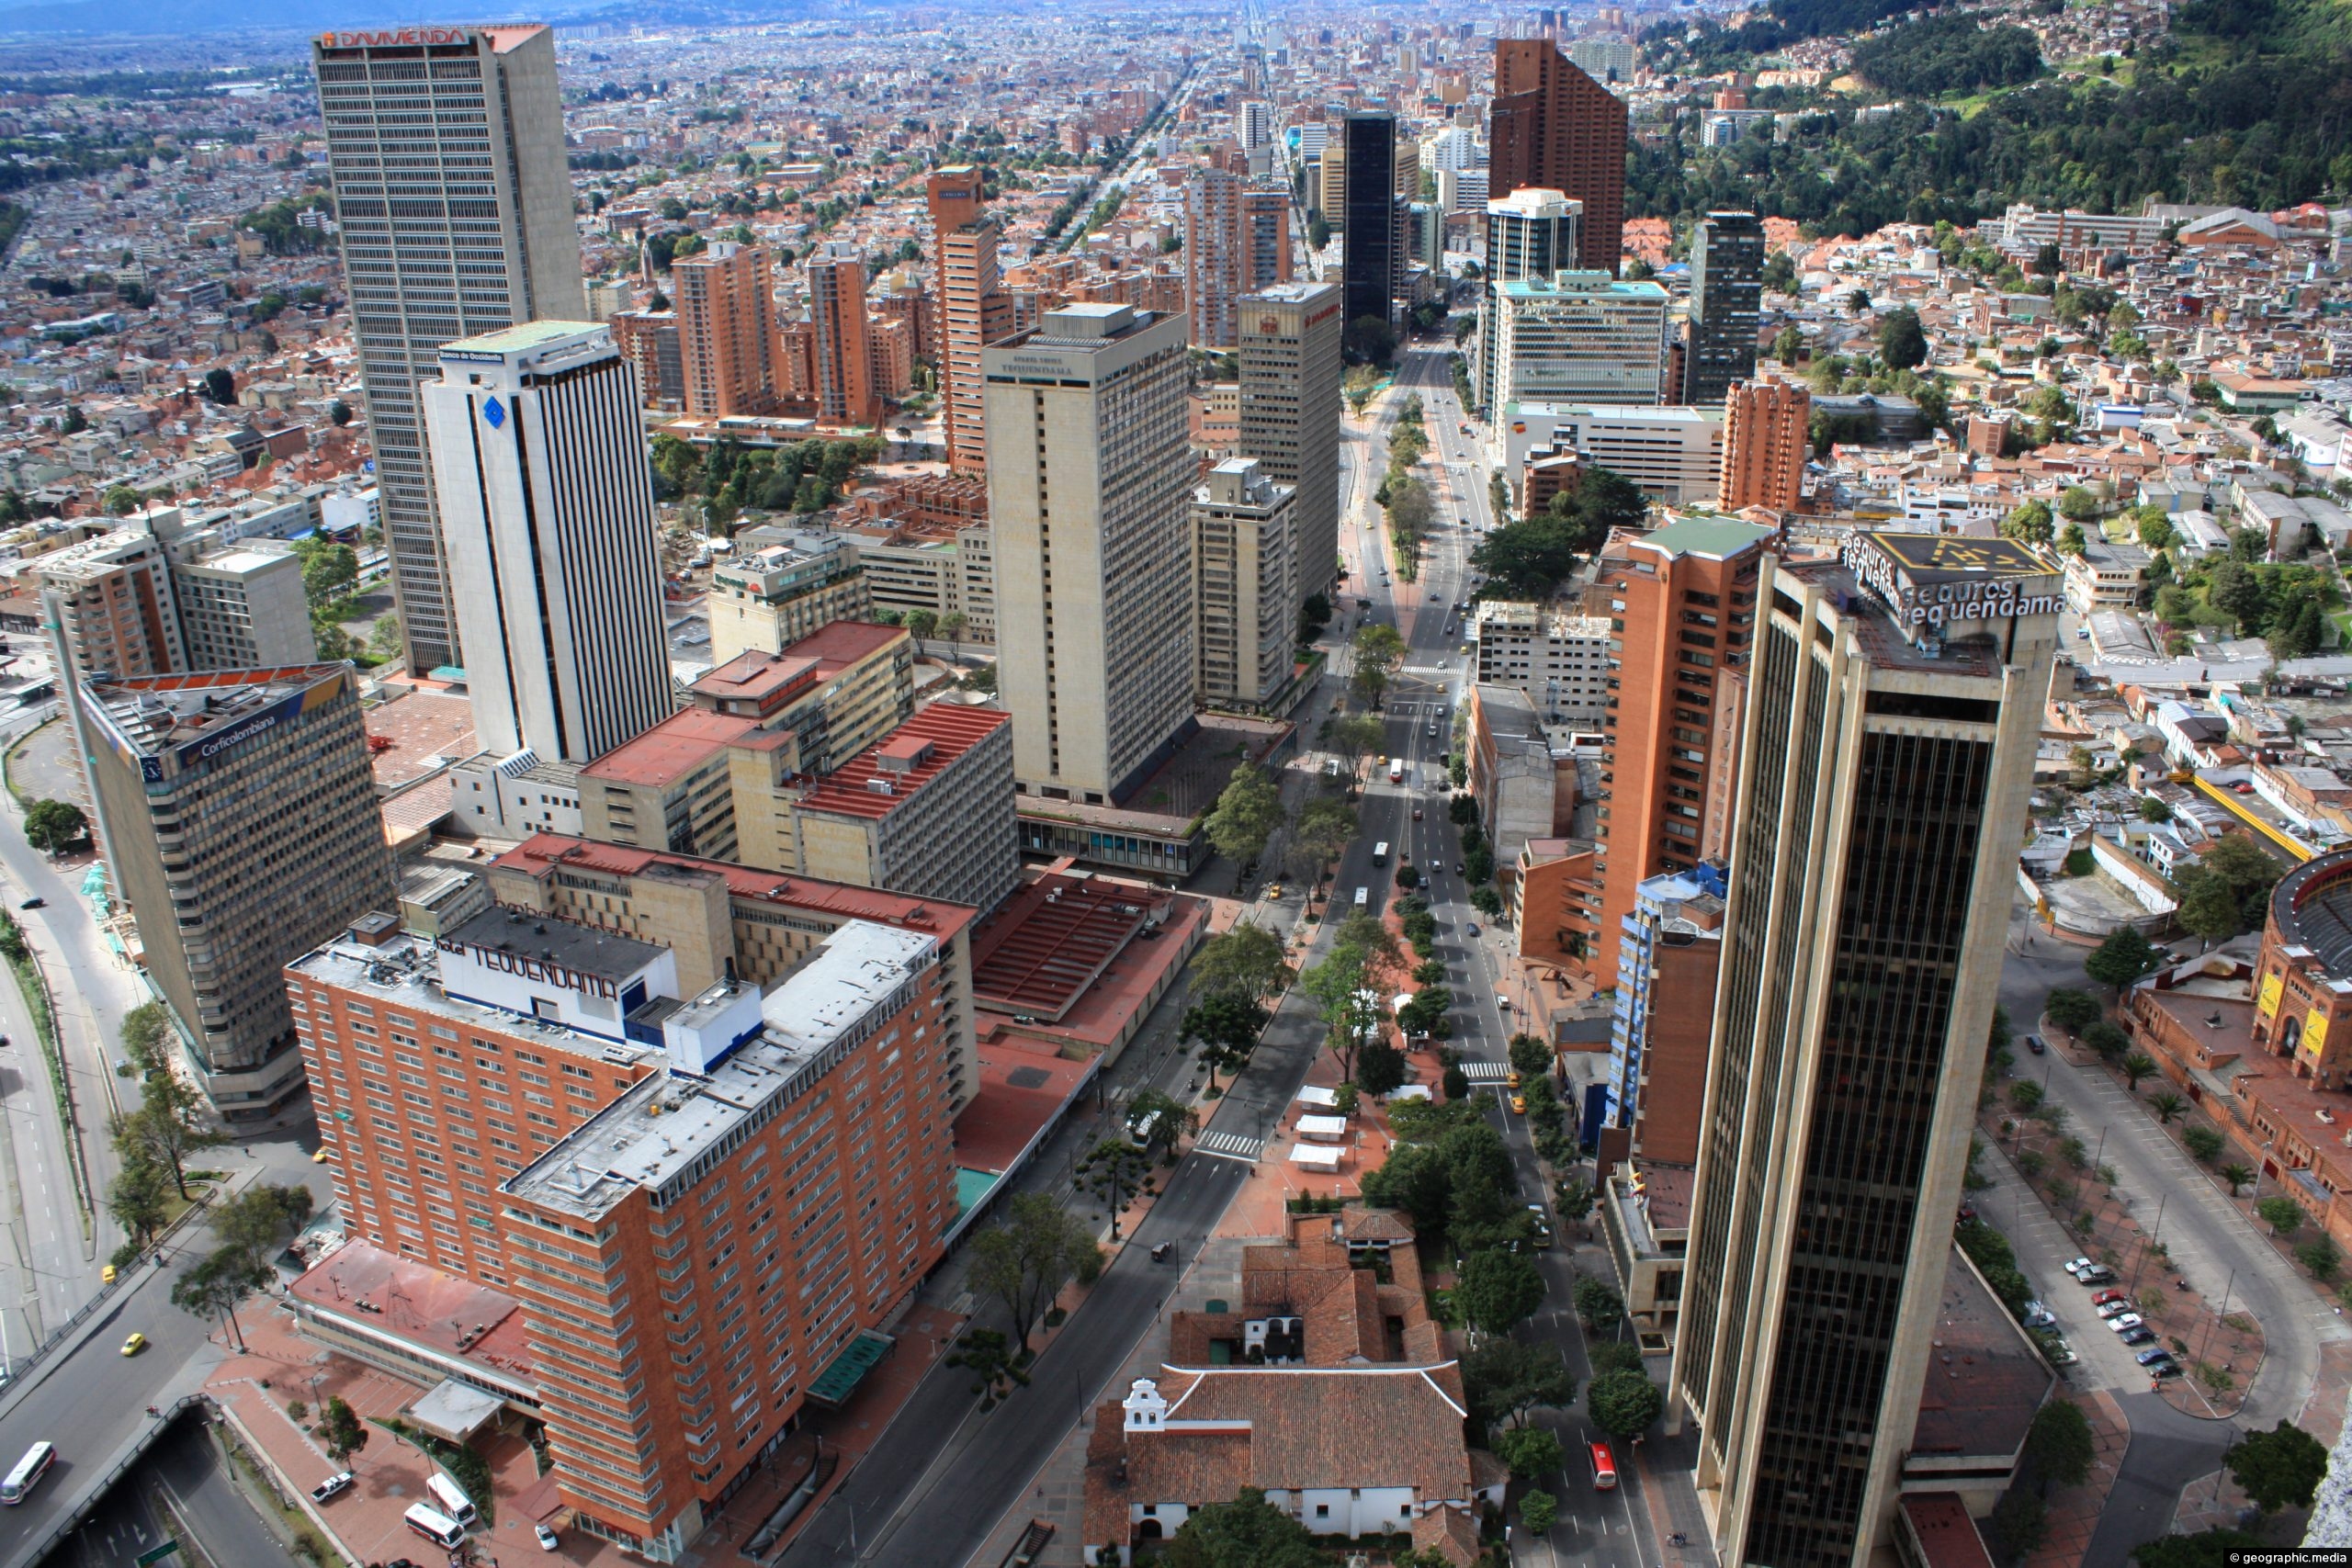 Avenida Septima in Bogota (circa 2009)